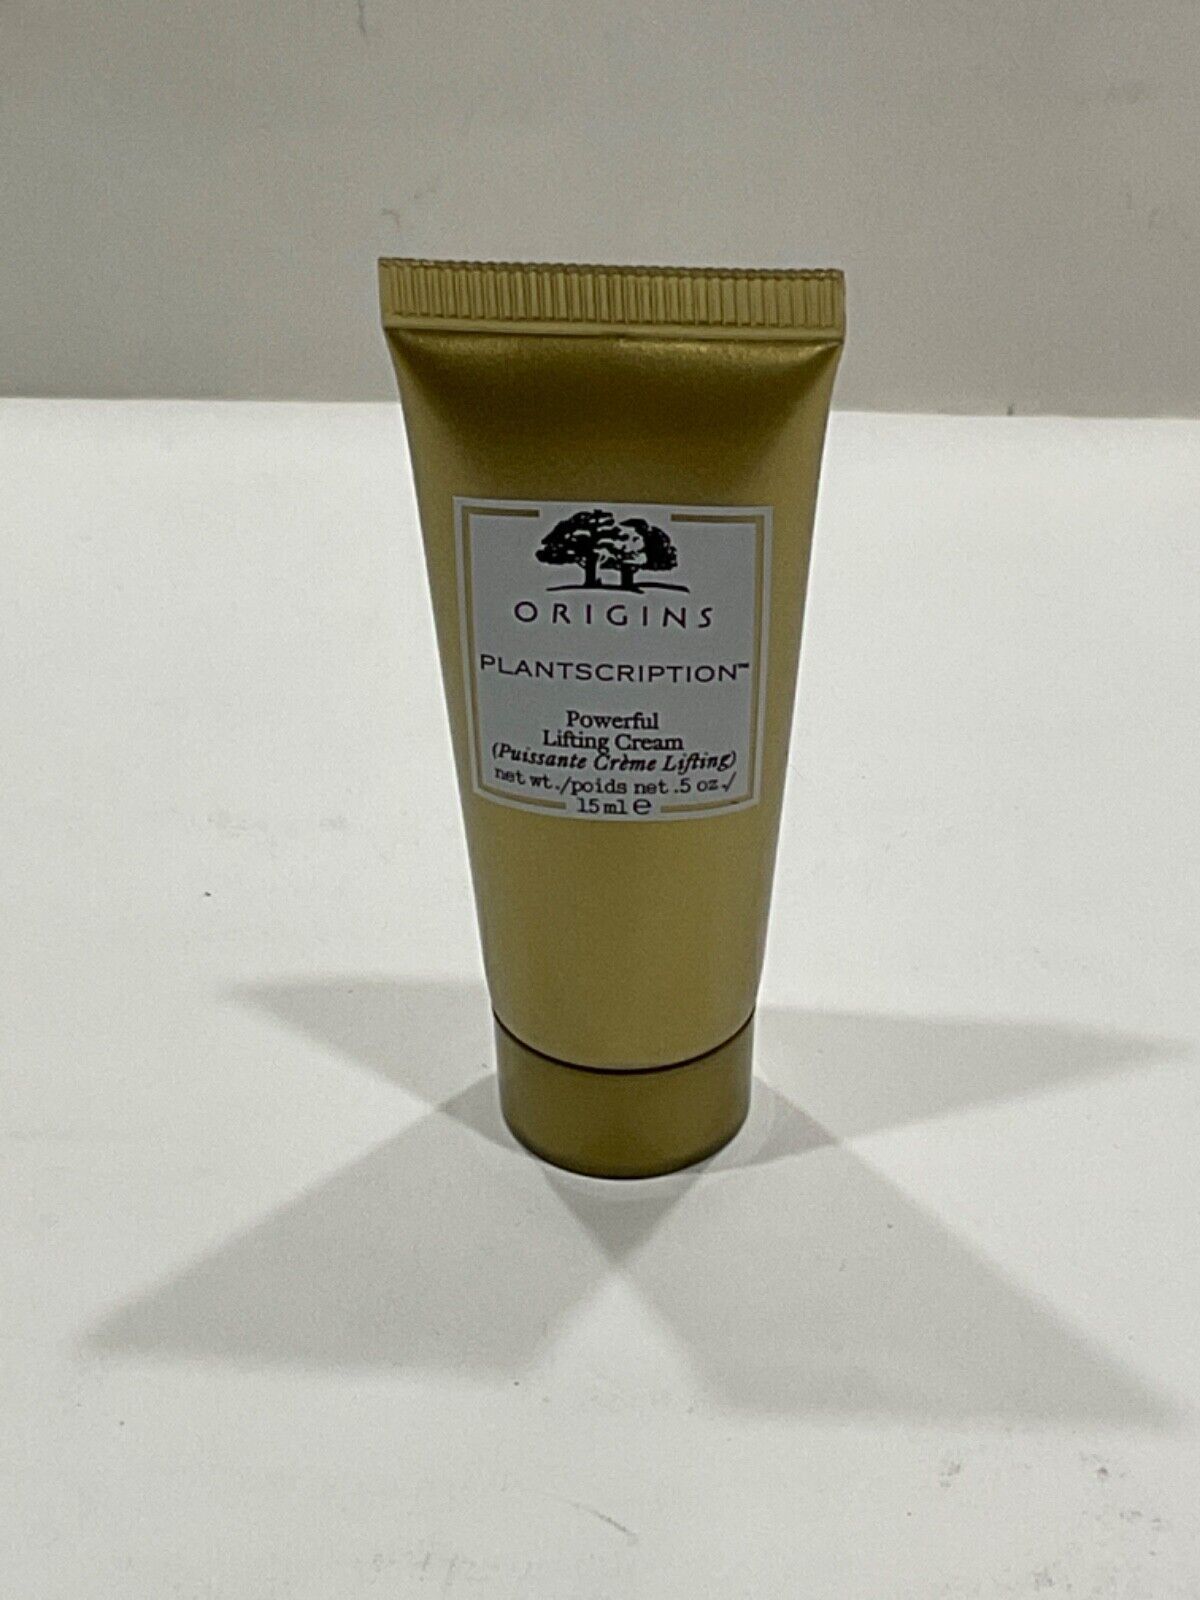 ORIGINS Plantscription Powerful Lifting Cream .5 oz 15 ml Anti-Aging Travel size - $12.99